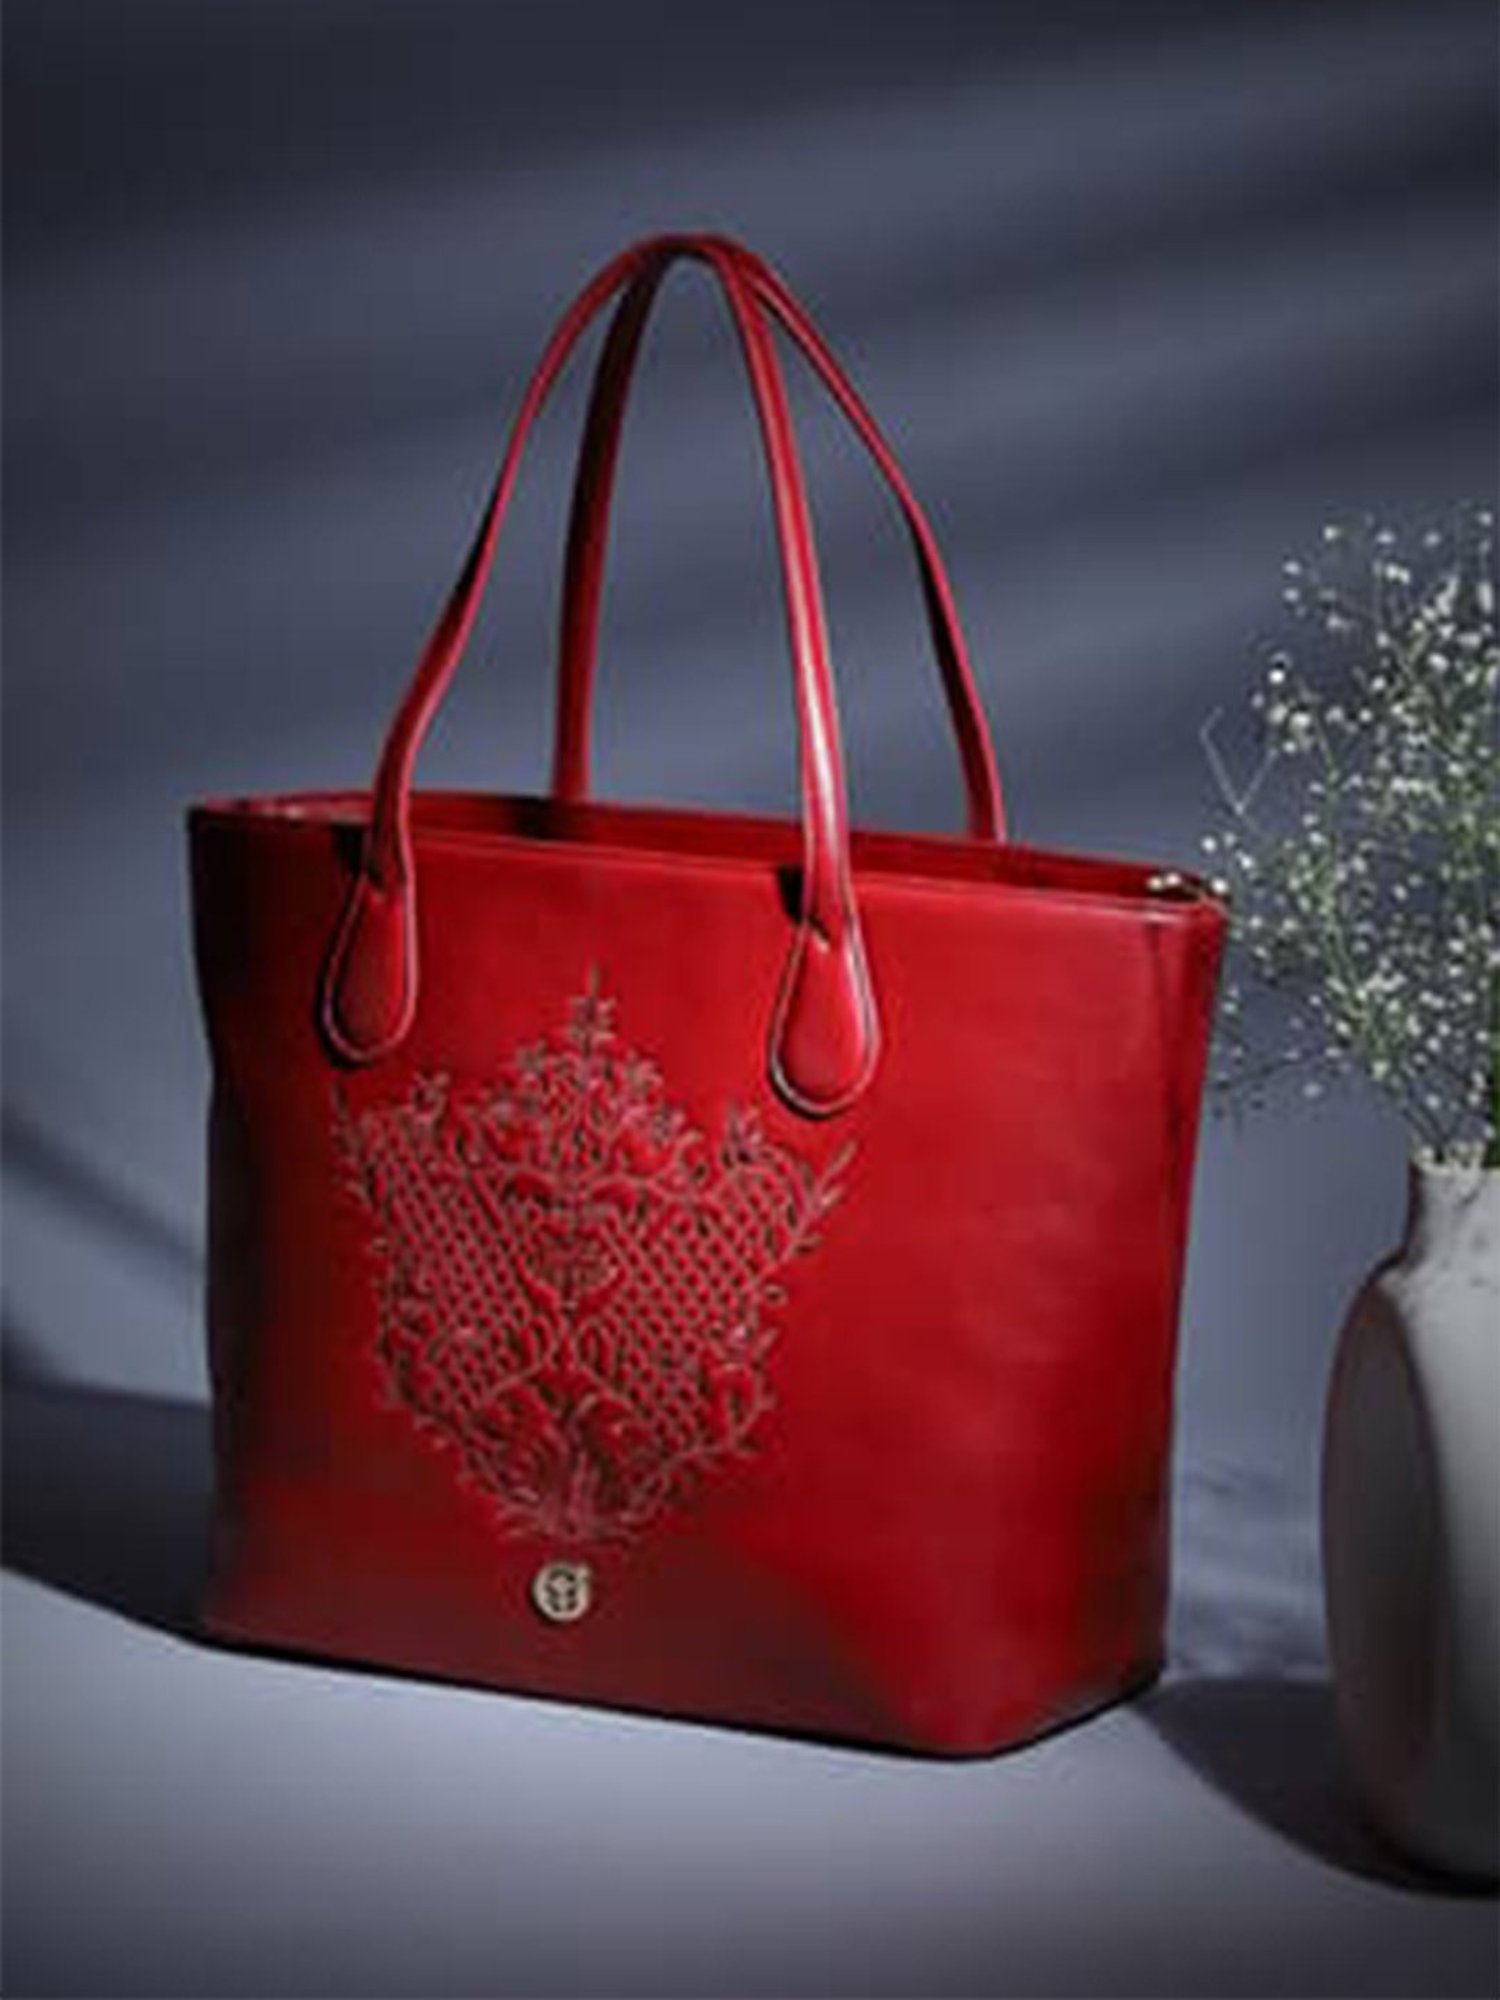 Buy Biba Black One Size Tote Bag at Best Price @ Tata CLiQ